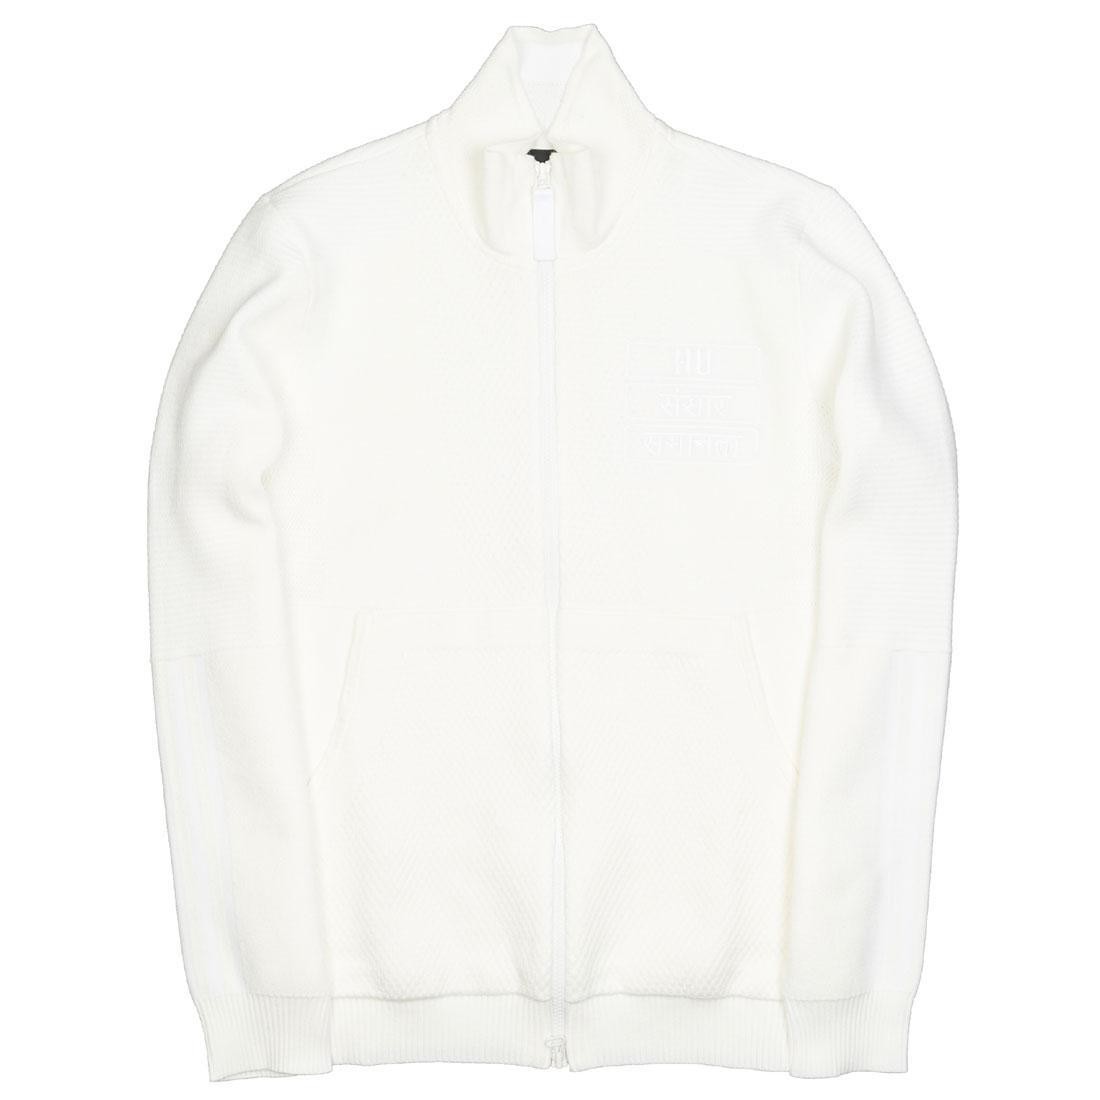 Adidas x Pharrell Williams Men Hu Holi Track Jacket white off white